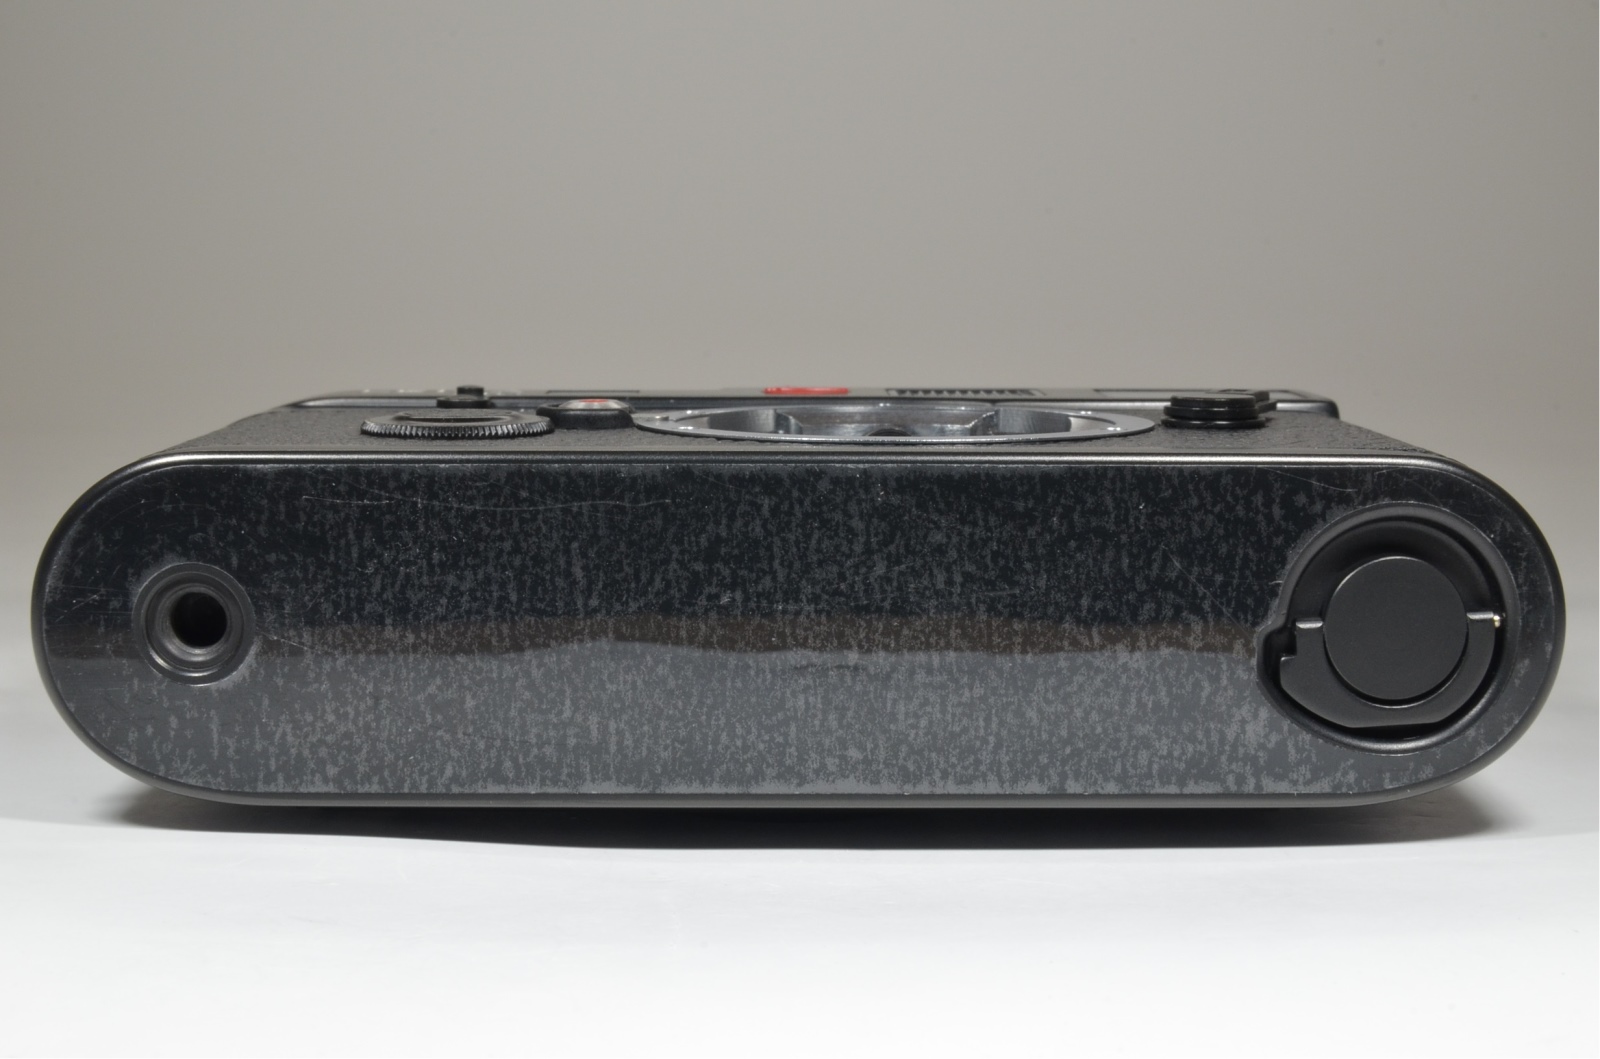 leica m6 0.72 black rangefinder serial no.1689478 year 1986 with case